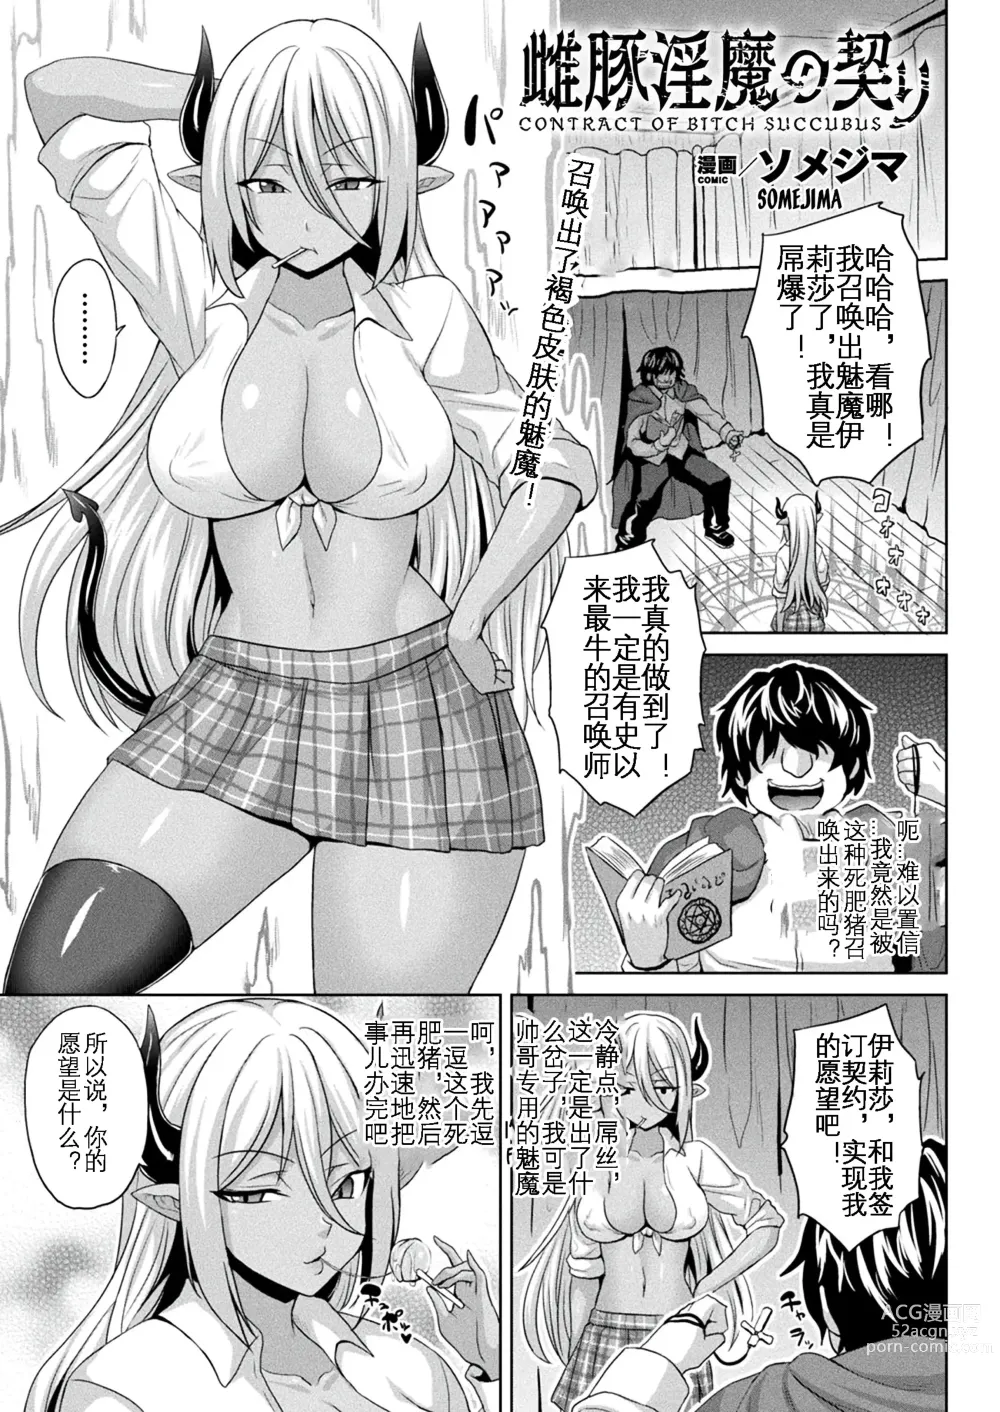 Page 2 of manga Mesubuta Inma no Chigiri - Contract of Bitch Succubus